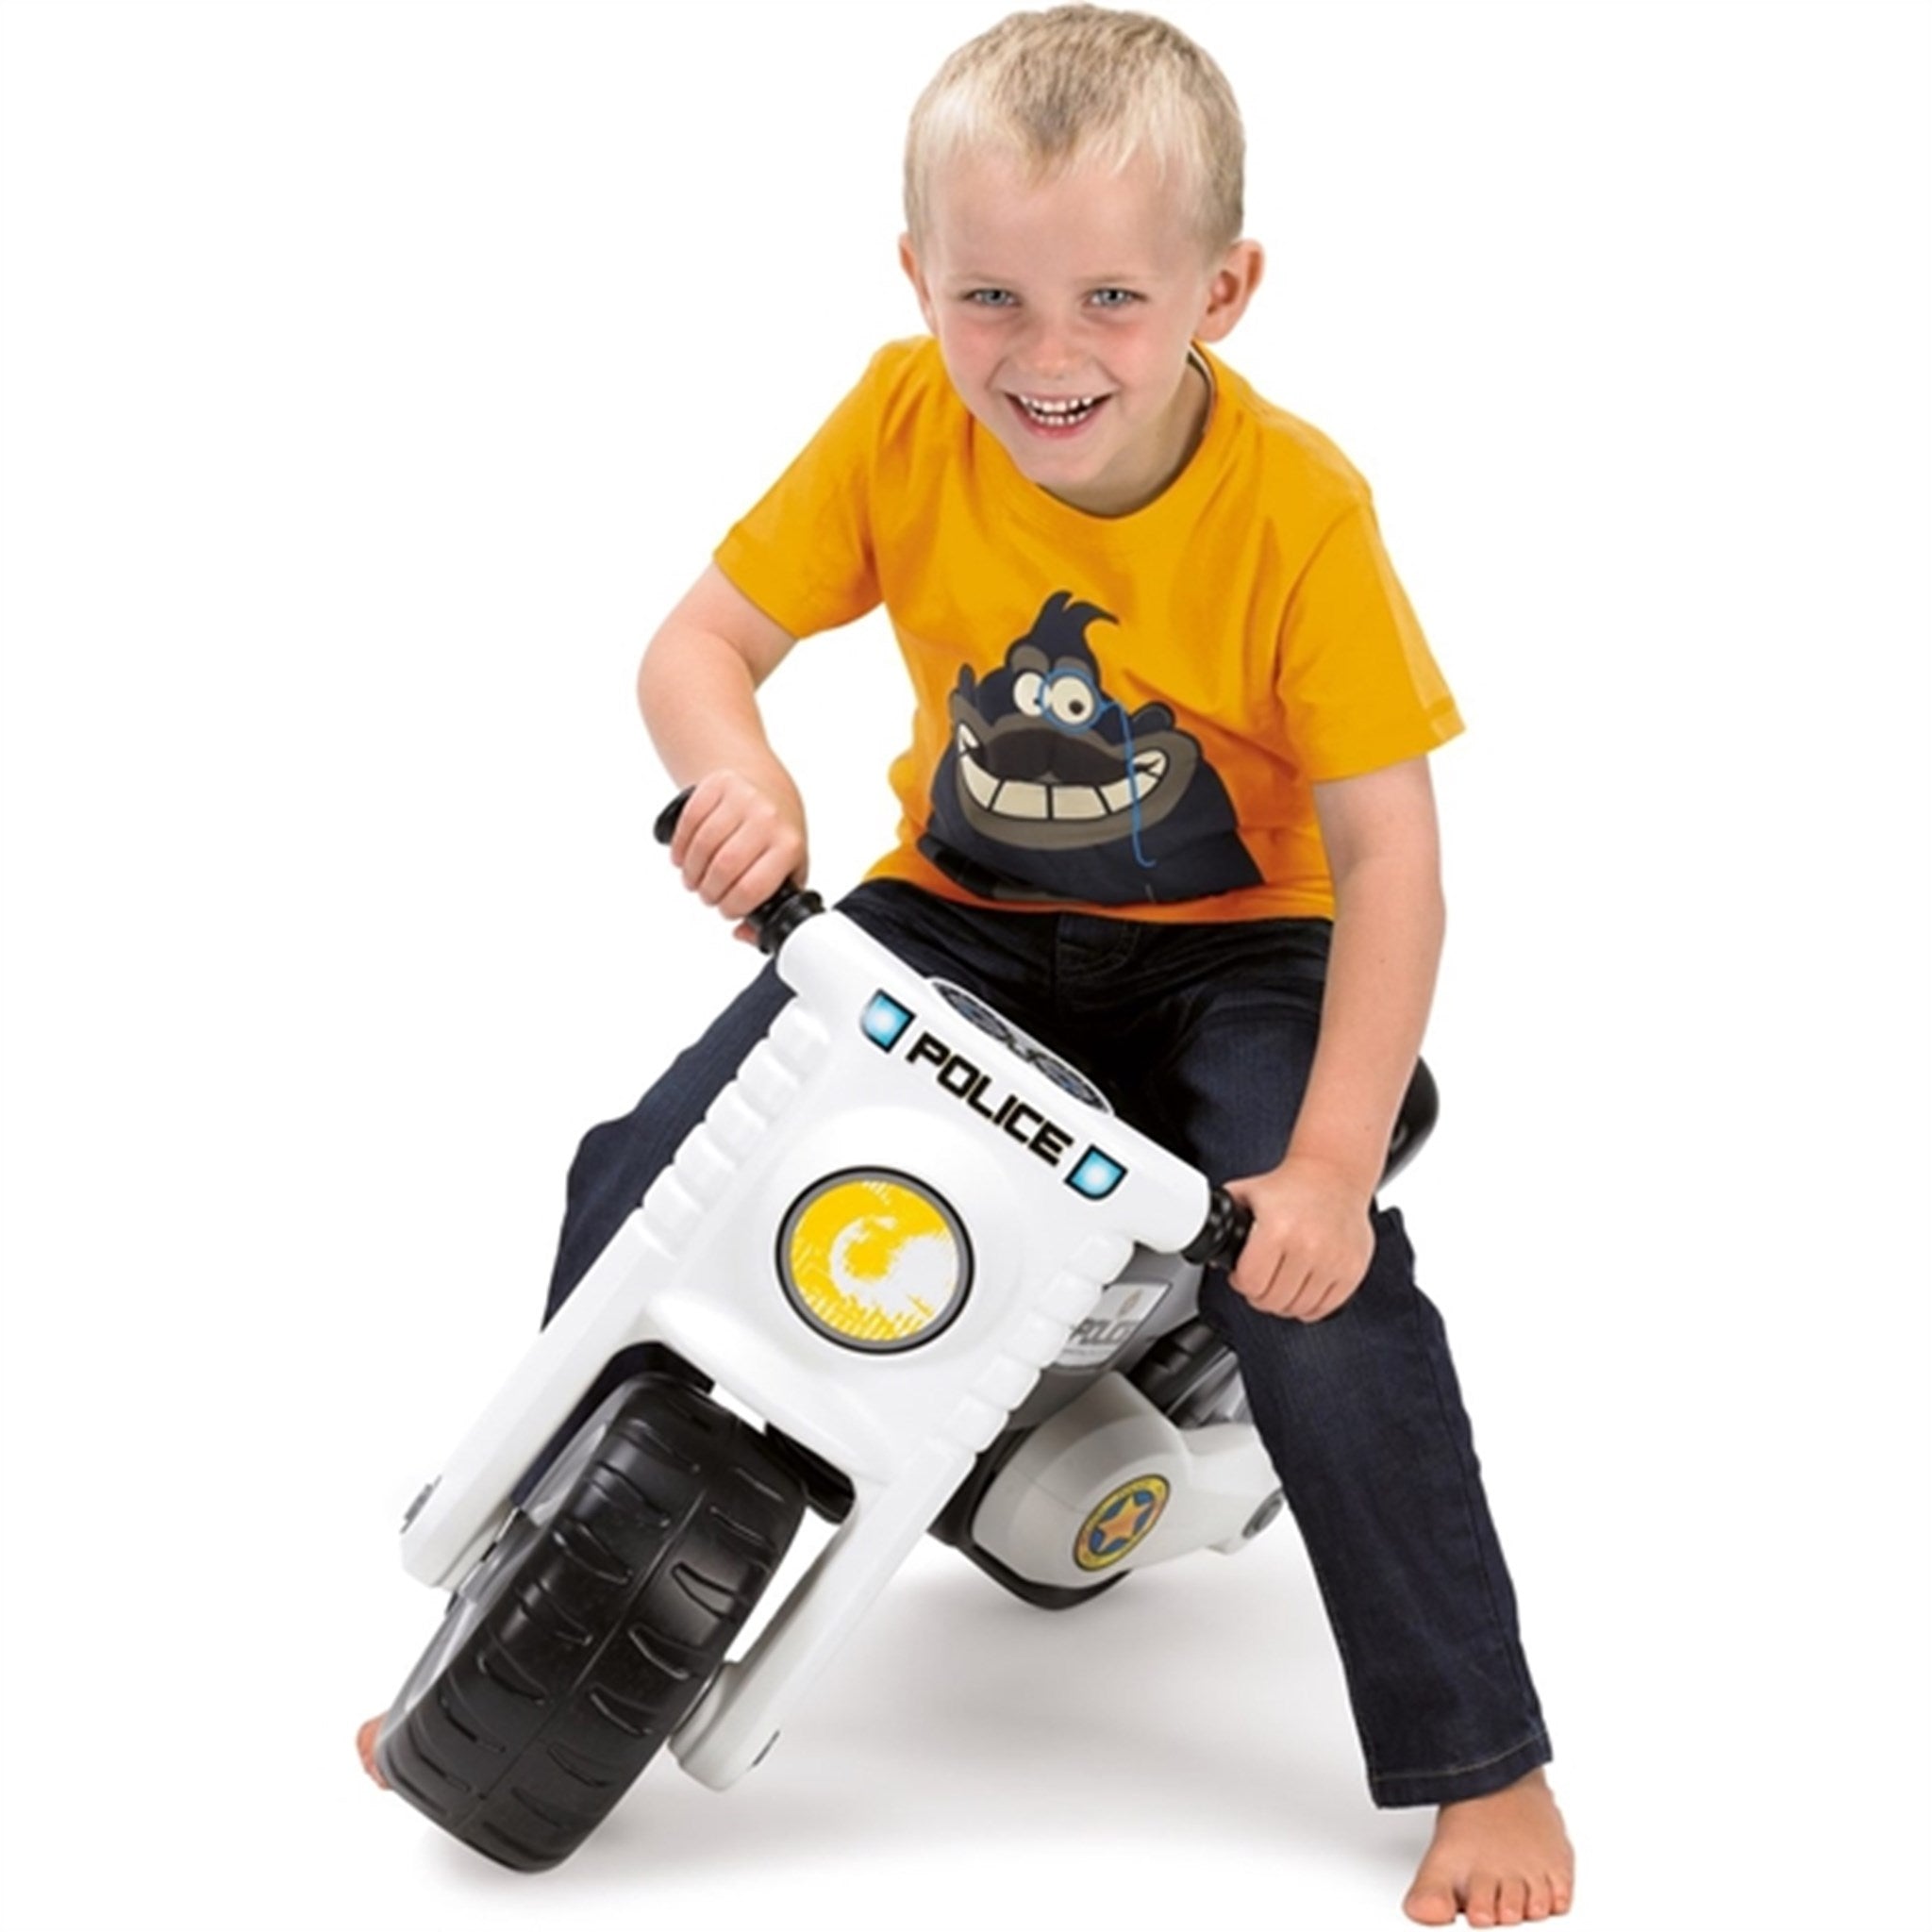 Dantoy Motorbike With 2 Wheels 2